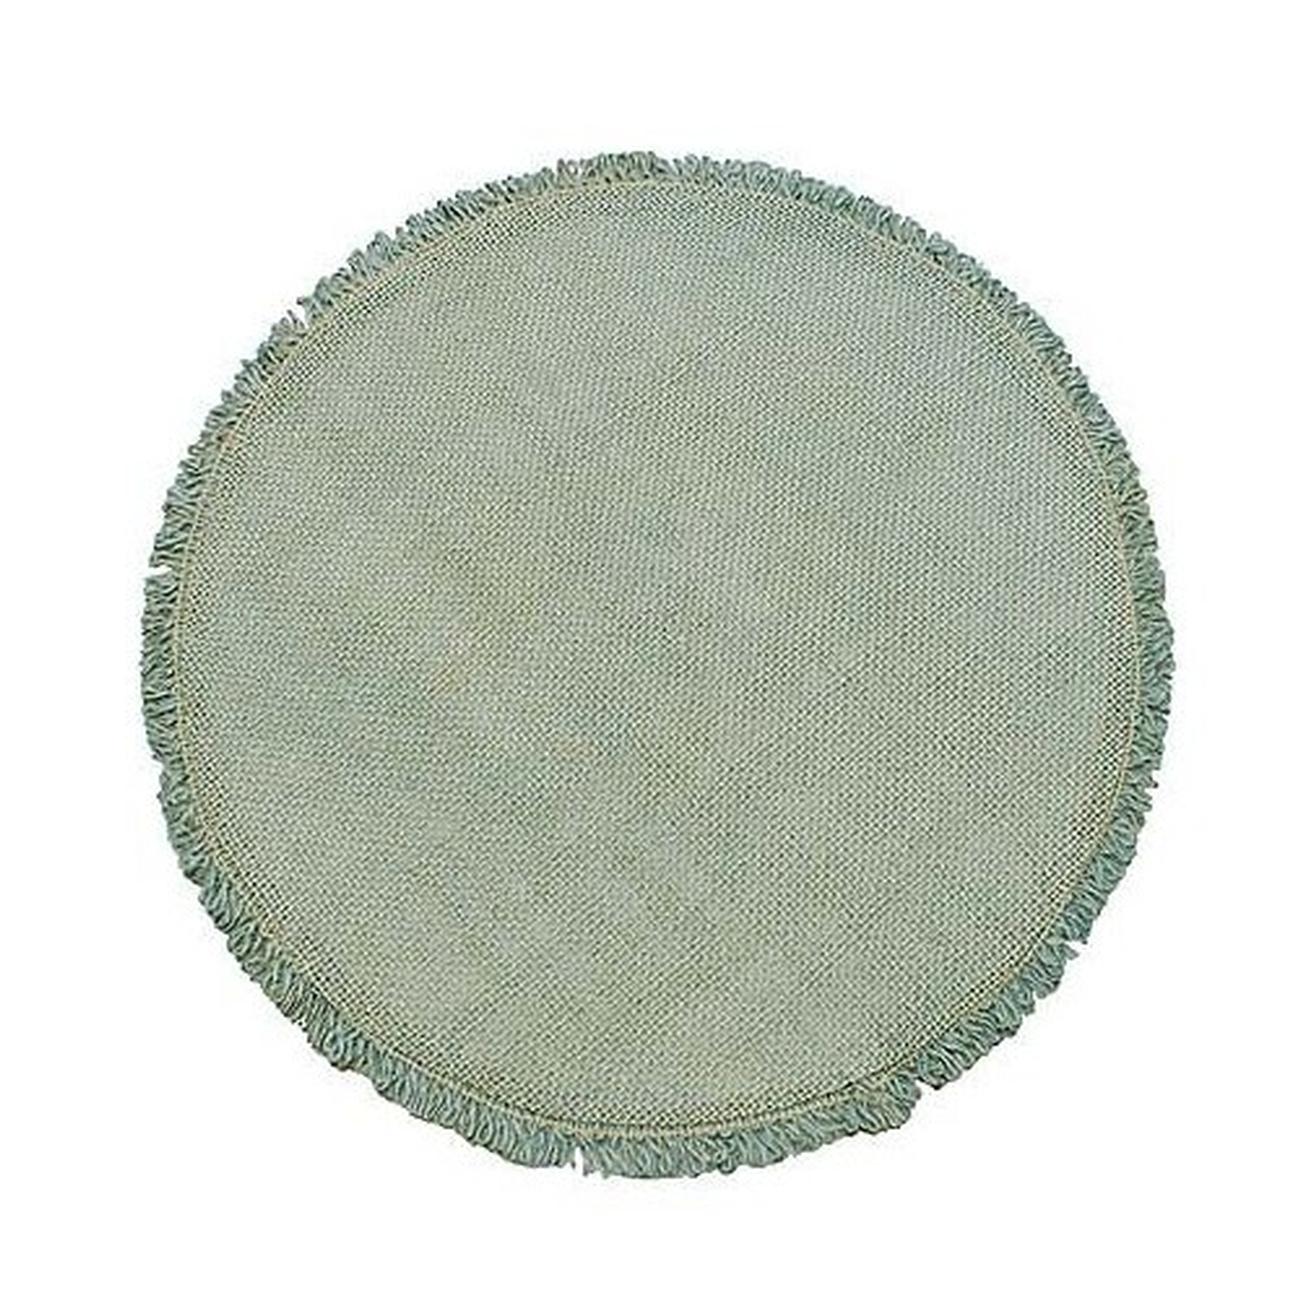 walton-moss-green-round-jute-placemat - Walton & Co Jute Placemat Moss Green 35cm